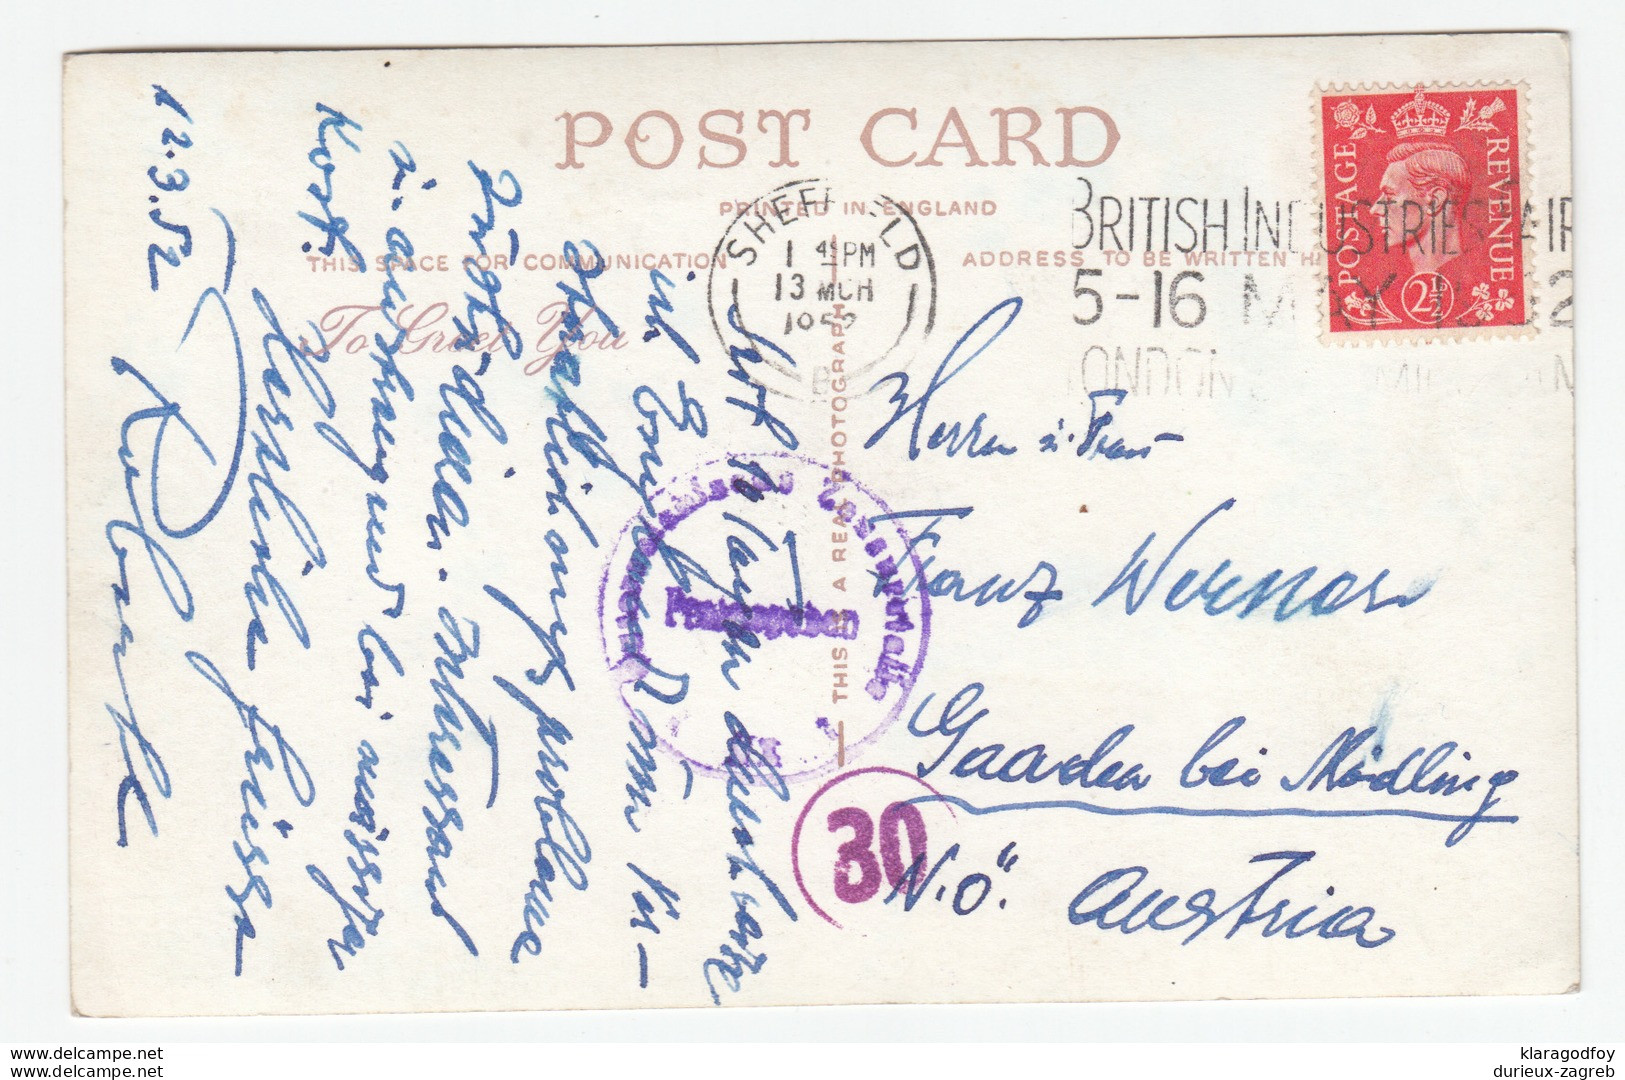 Sheffield, Whiteley Woods Old Postcard Censored Travelled 1952 B170915 - Sheffield